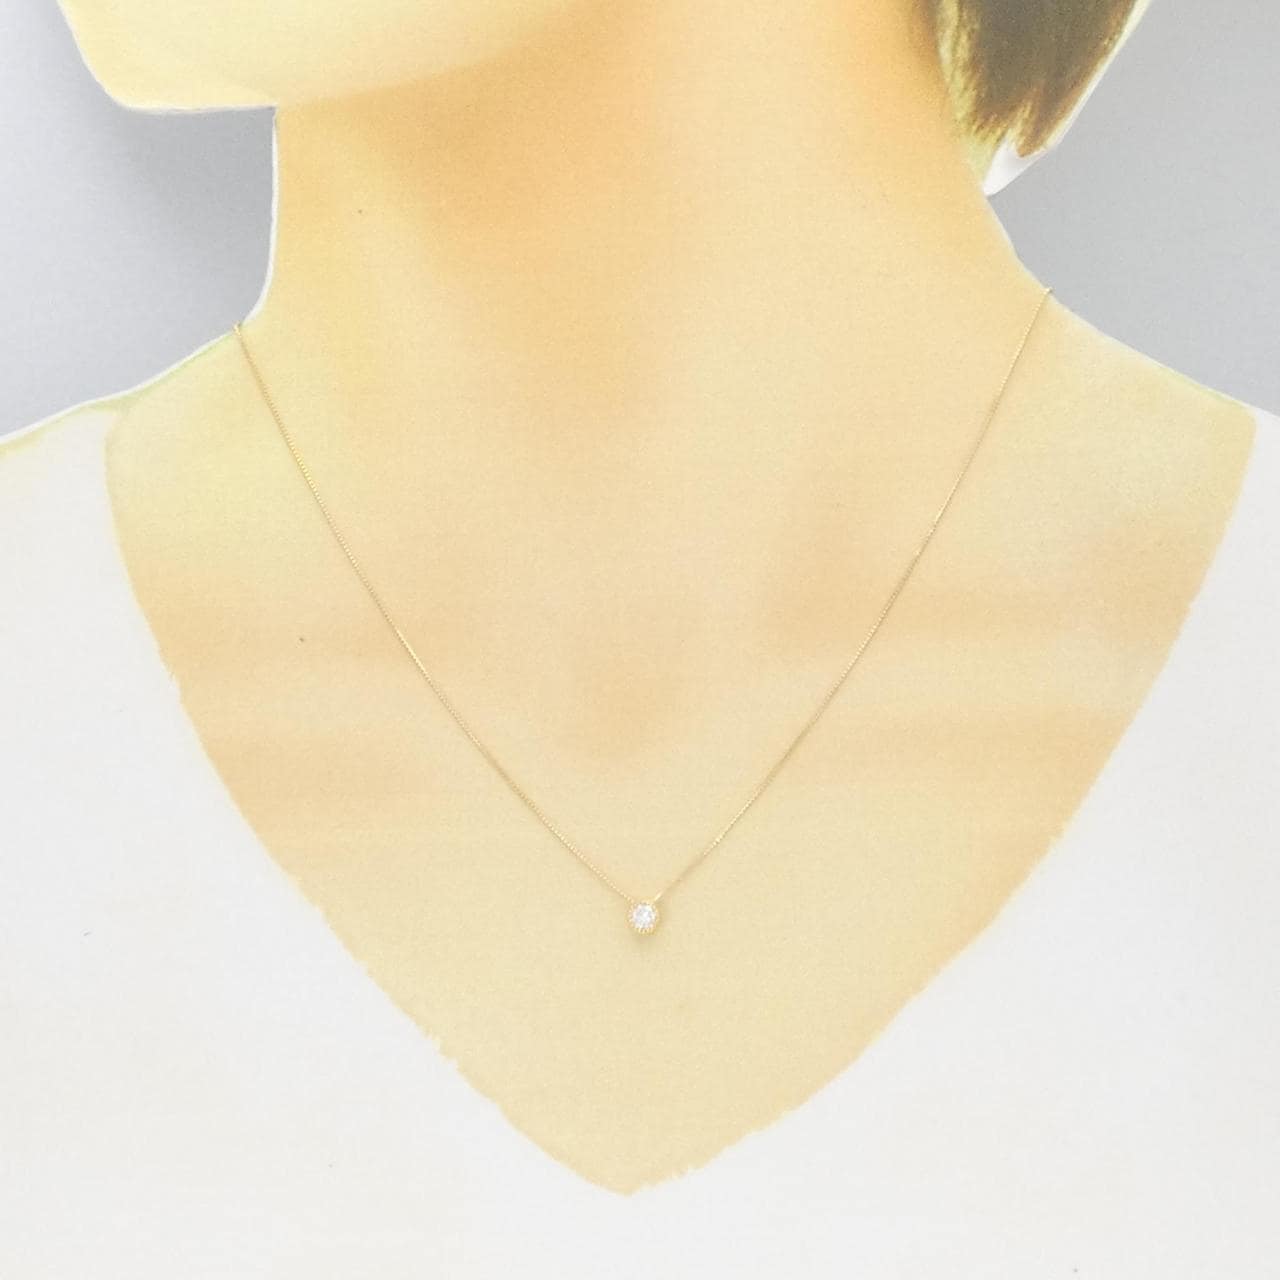 K18YG Solitaire Diamond Necklace 0.16CT